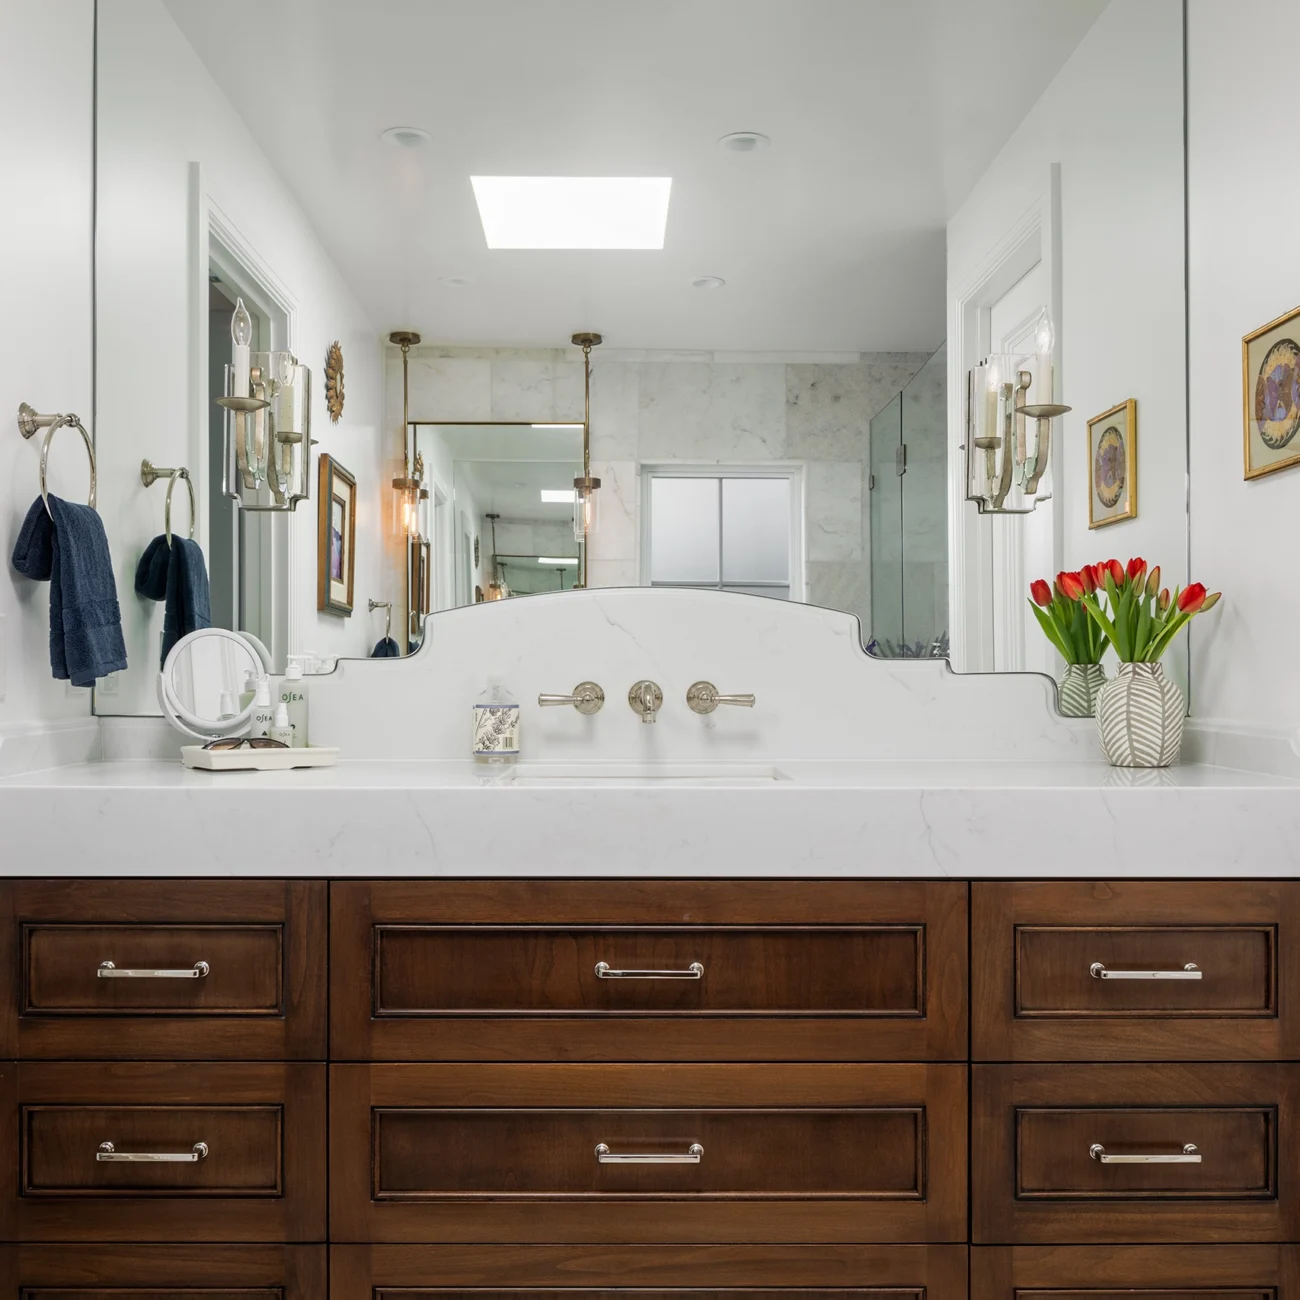 Christine Vroom Interiors | Via Arriba | Bright white bathroom with custom vanity